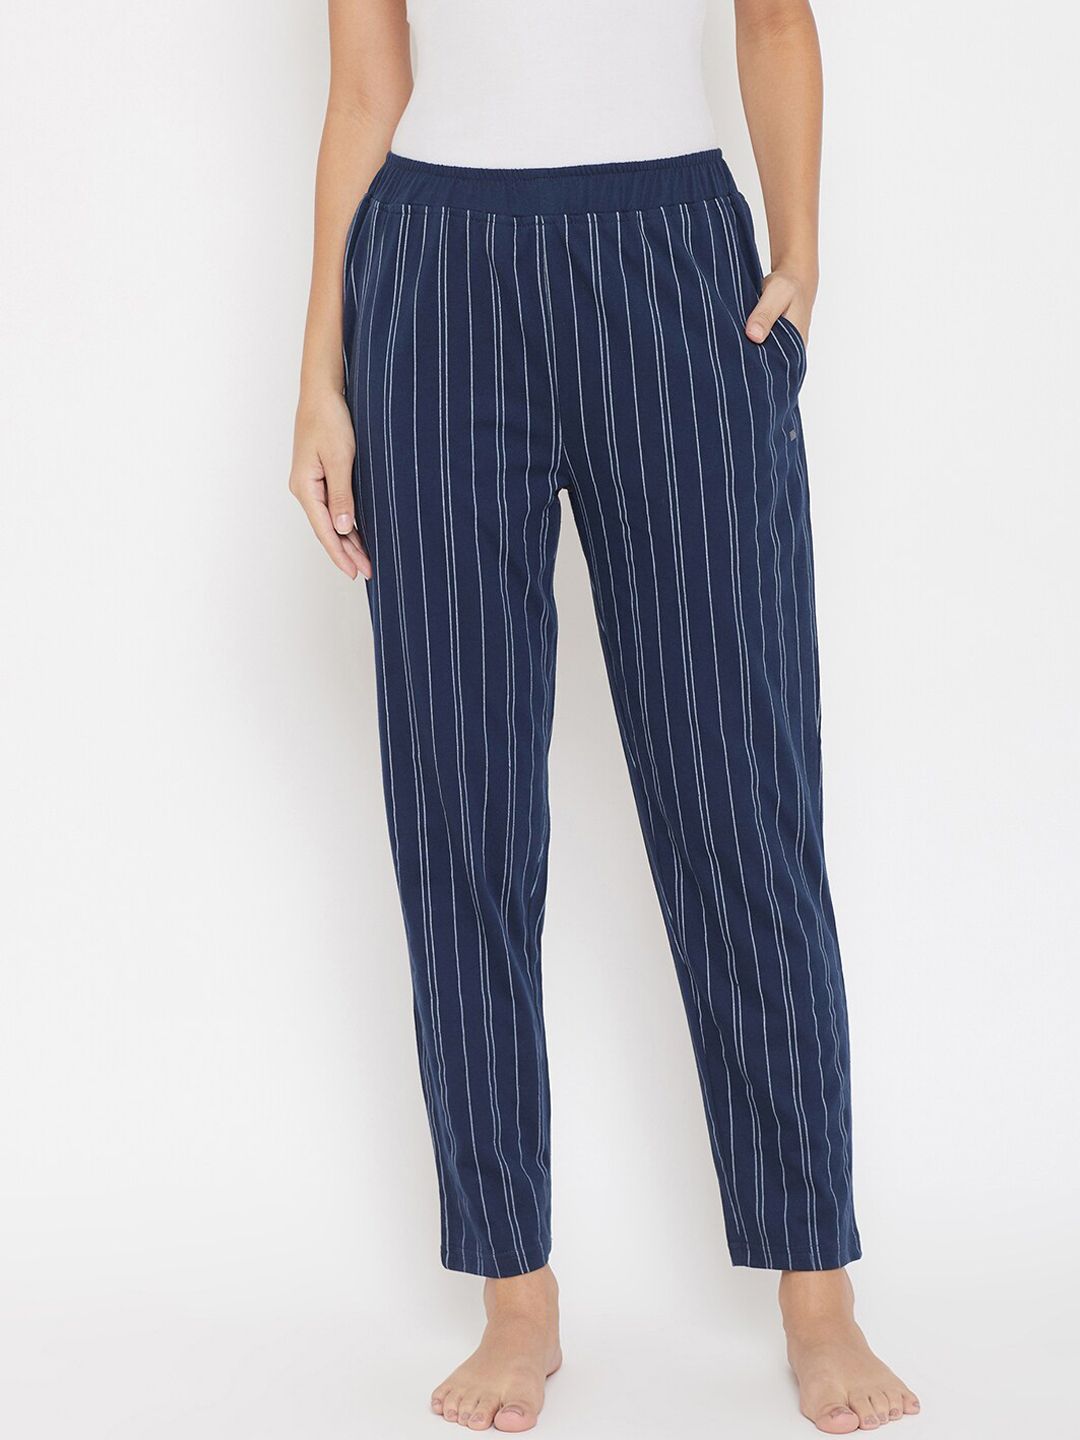 Okane Women Navy Blue & White Striped Lounge Pants Price in India